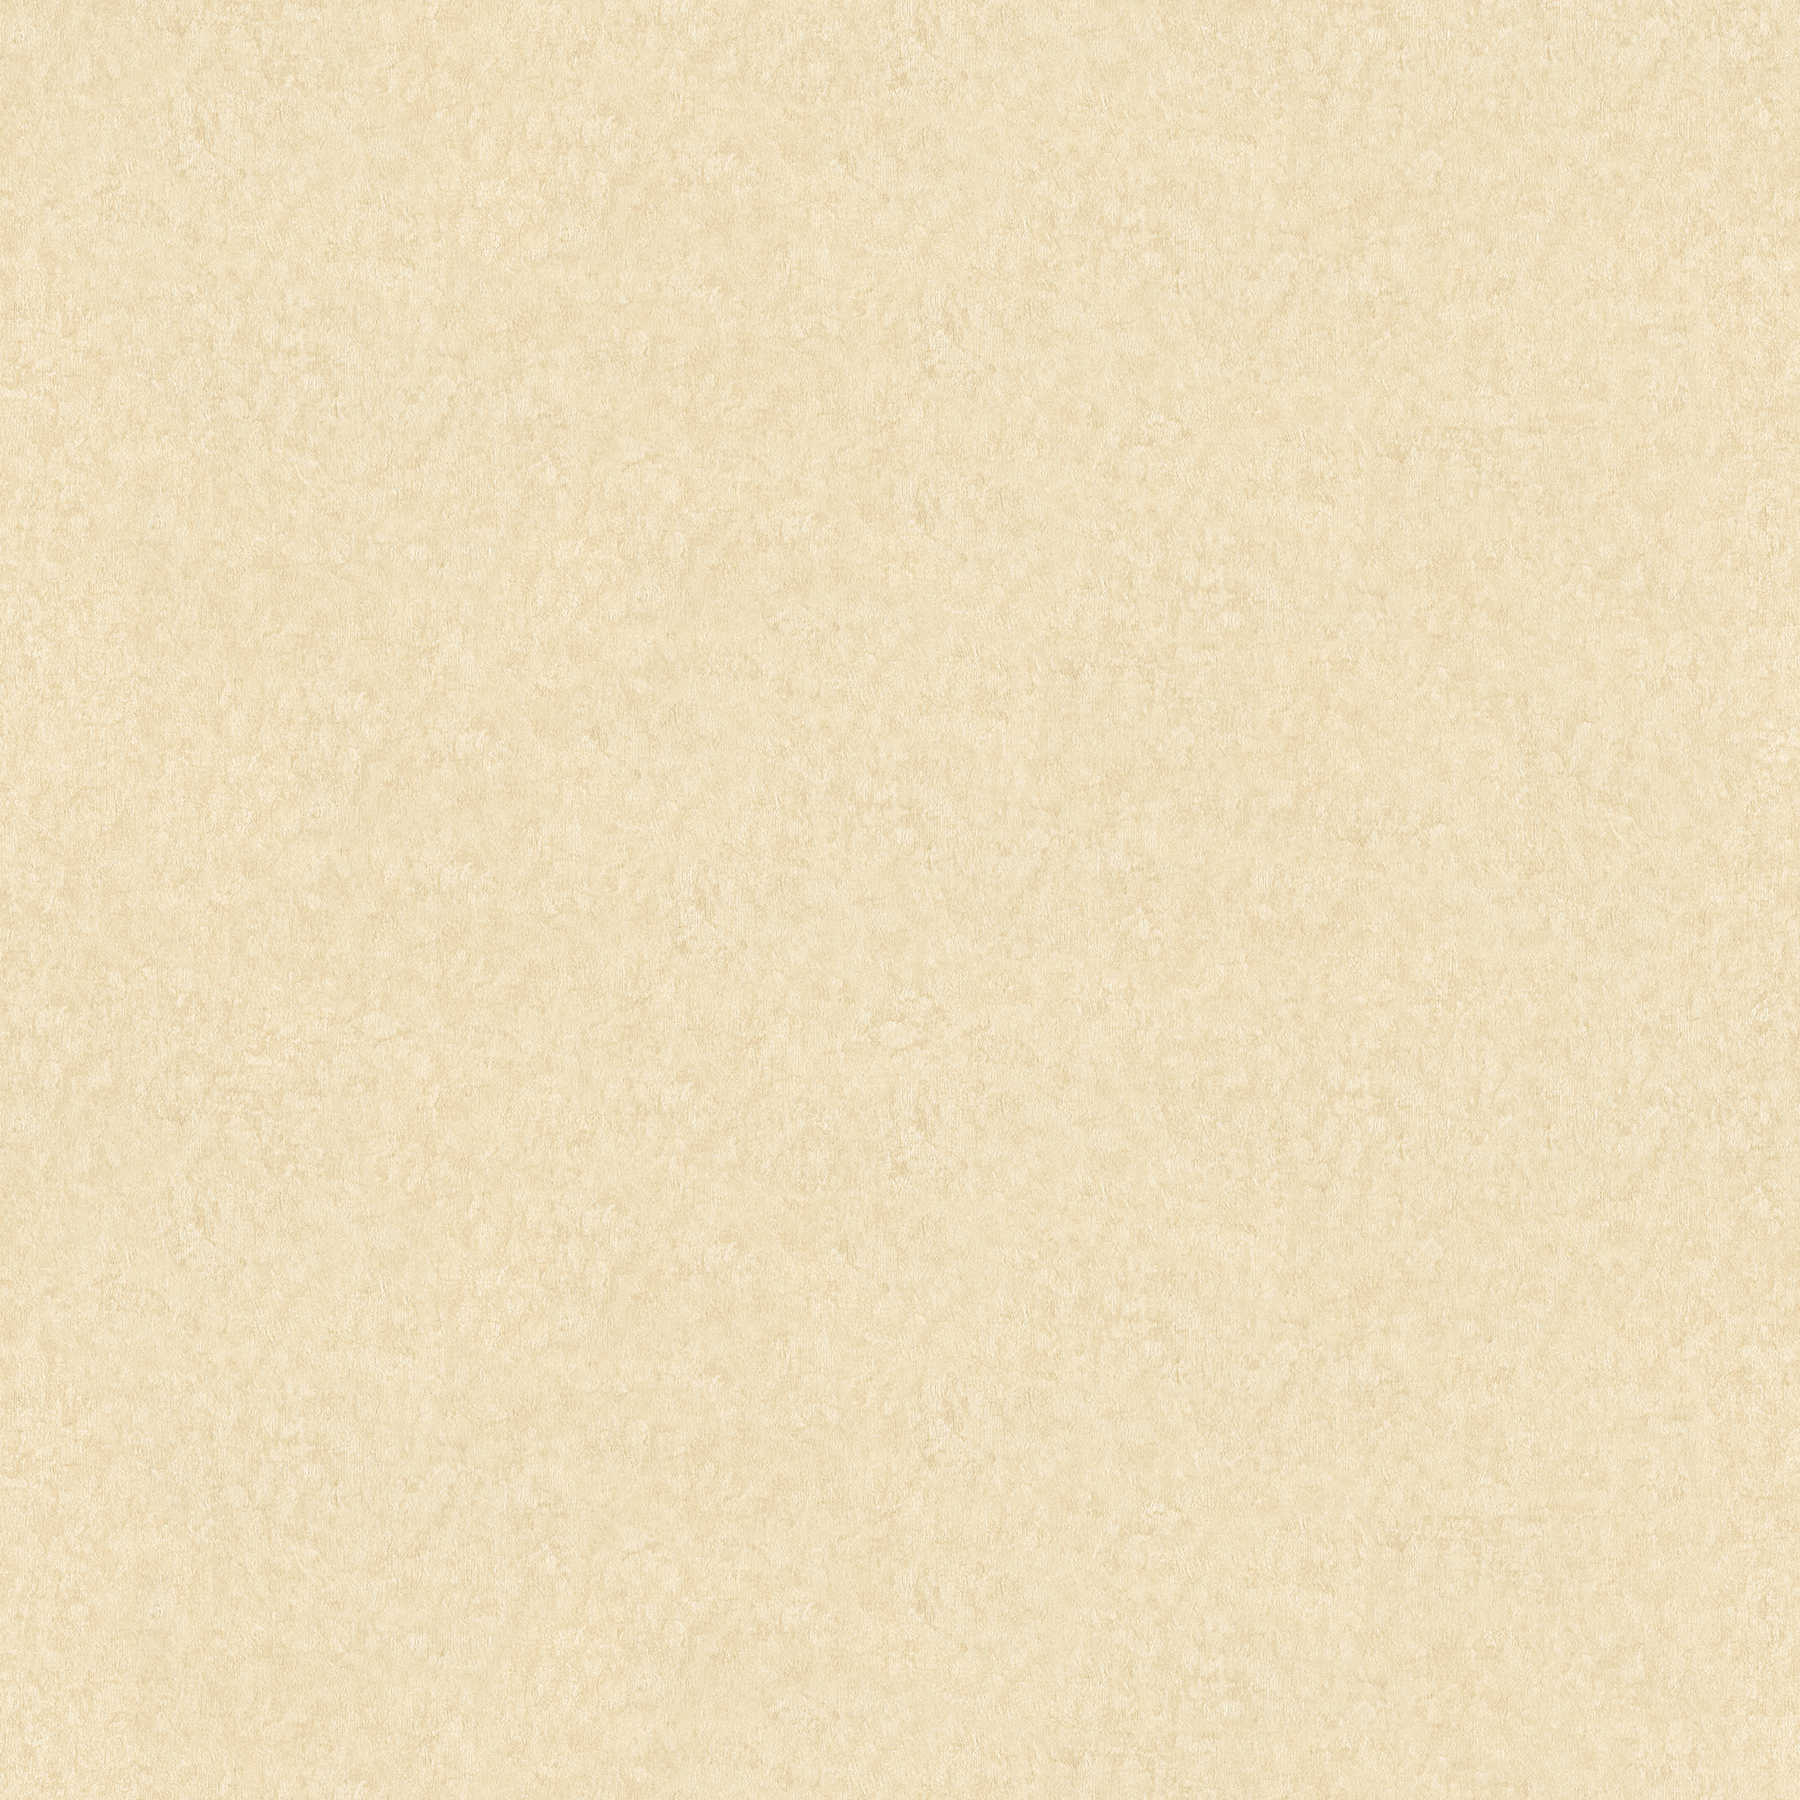 Premium plain wallpaper plain & matt - beige
